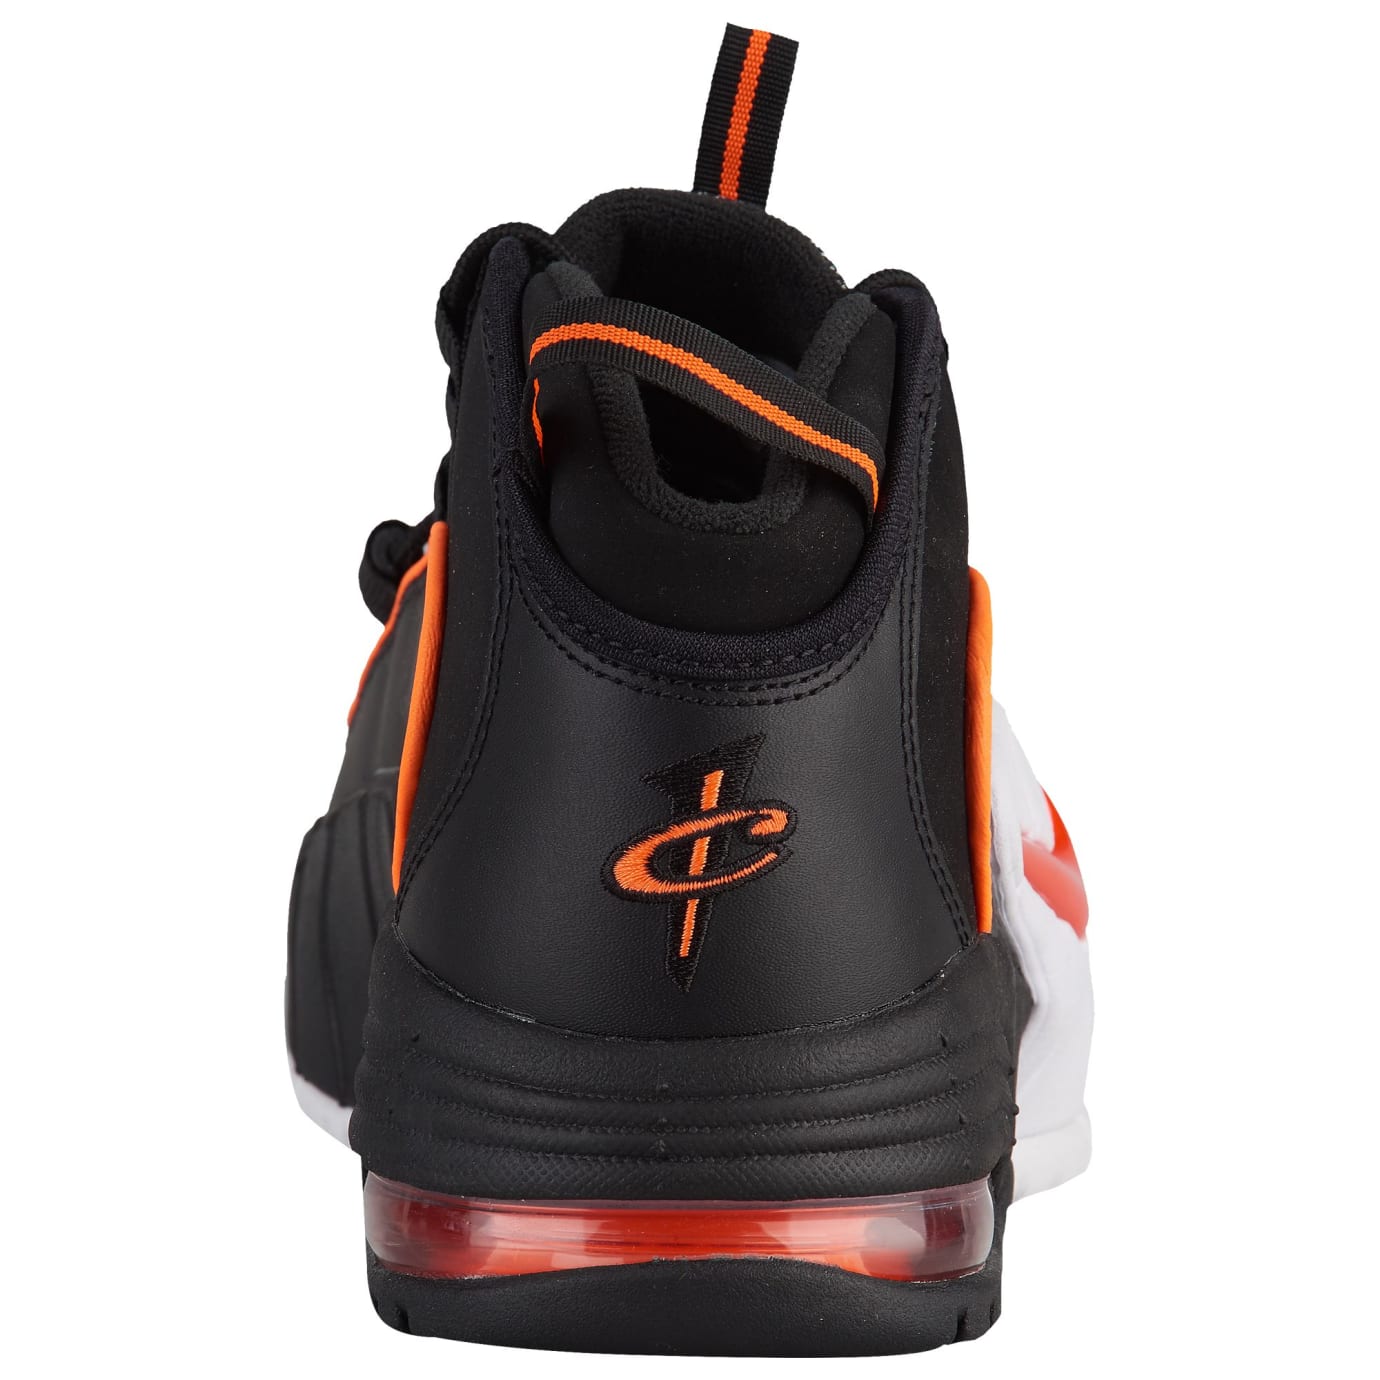 penny hardaway shoes orange and black